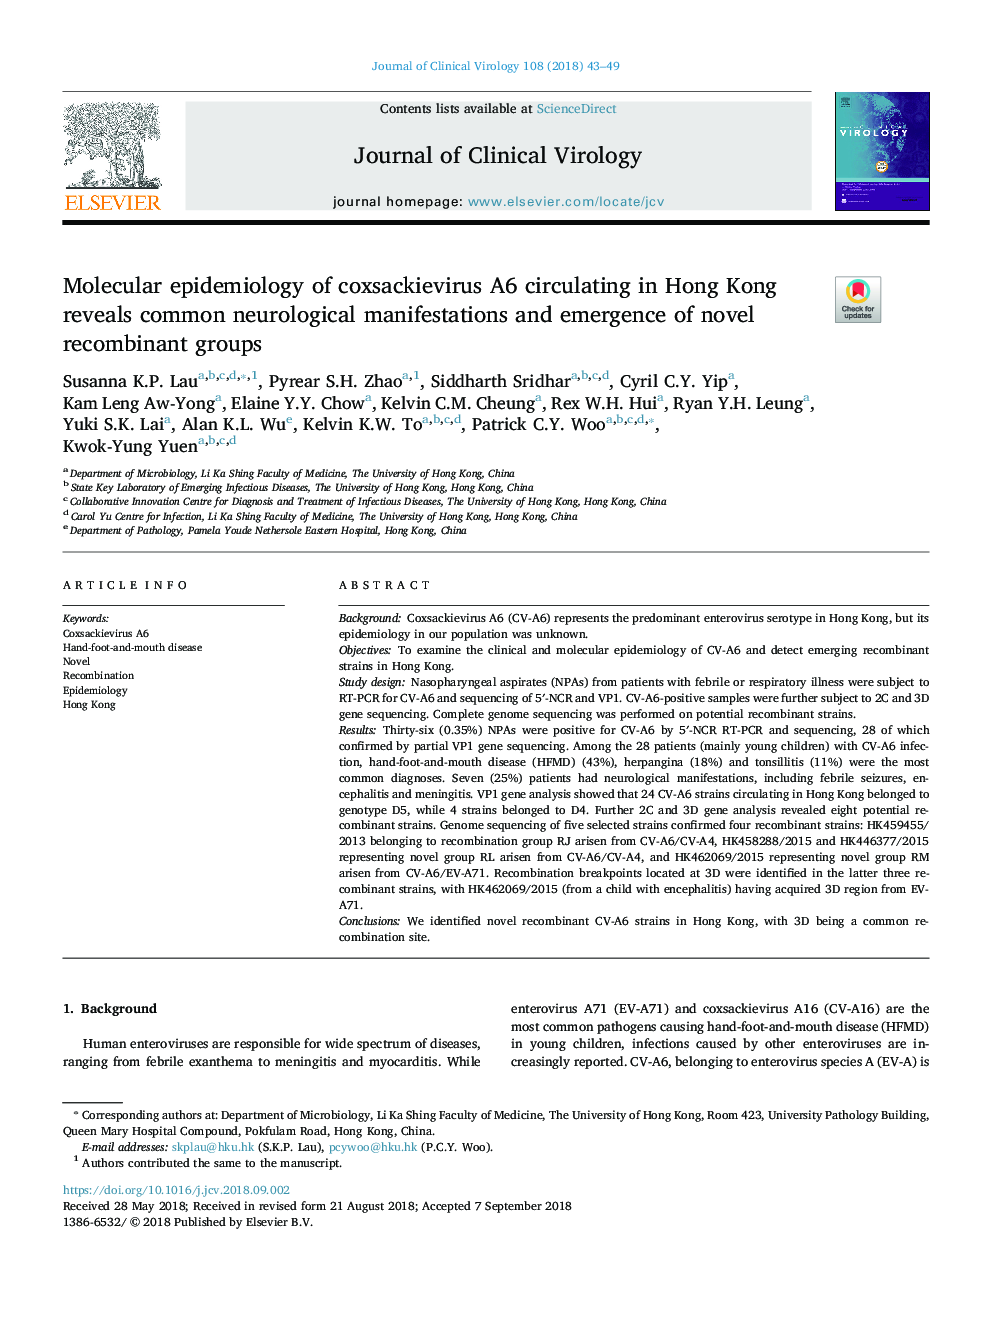 Molecular epidemiology of coxsackievirus A6 circulating in Hong Kong reveals common neurological manifestations and emergence of novel recombinant groups